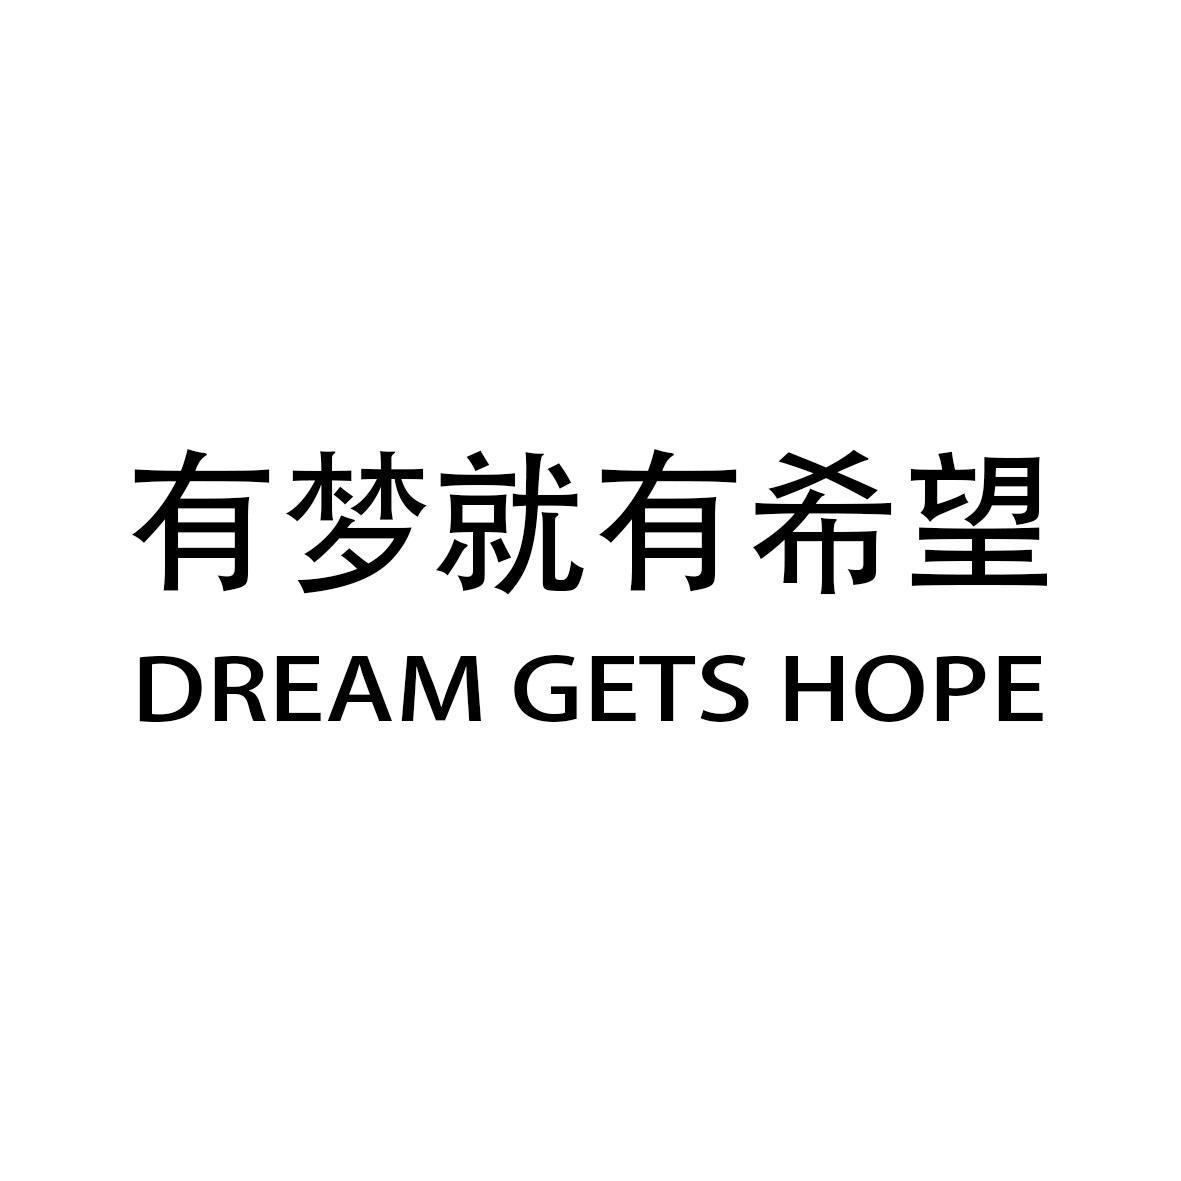 有梦就有希望 dream gets hope